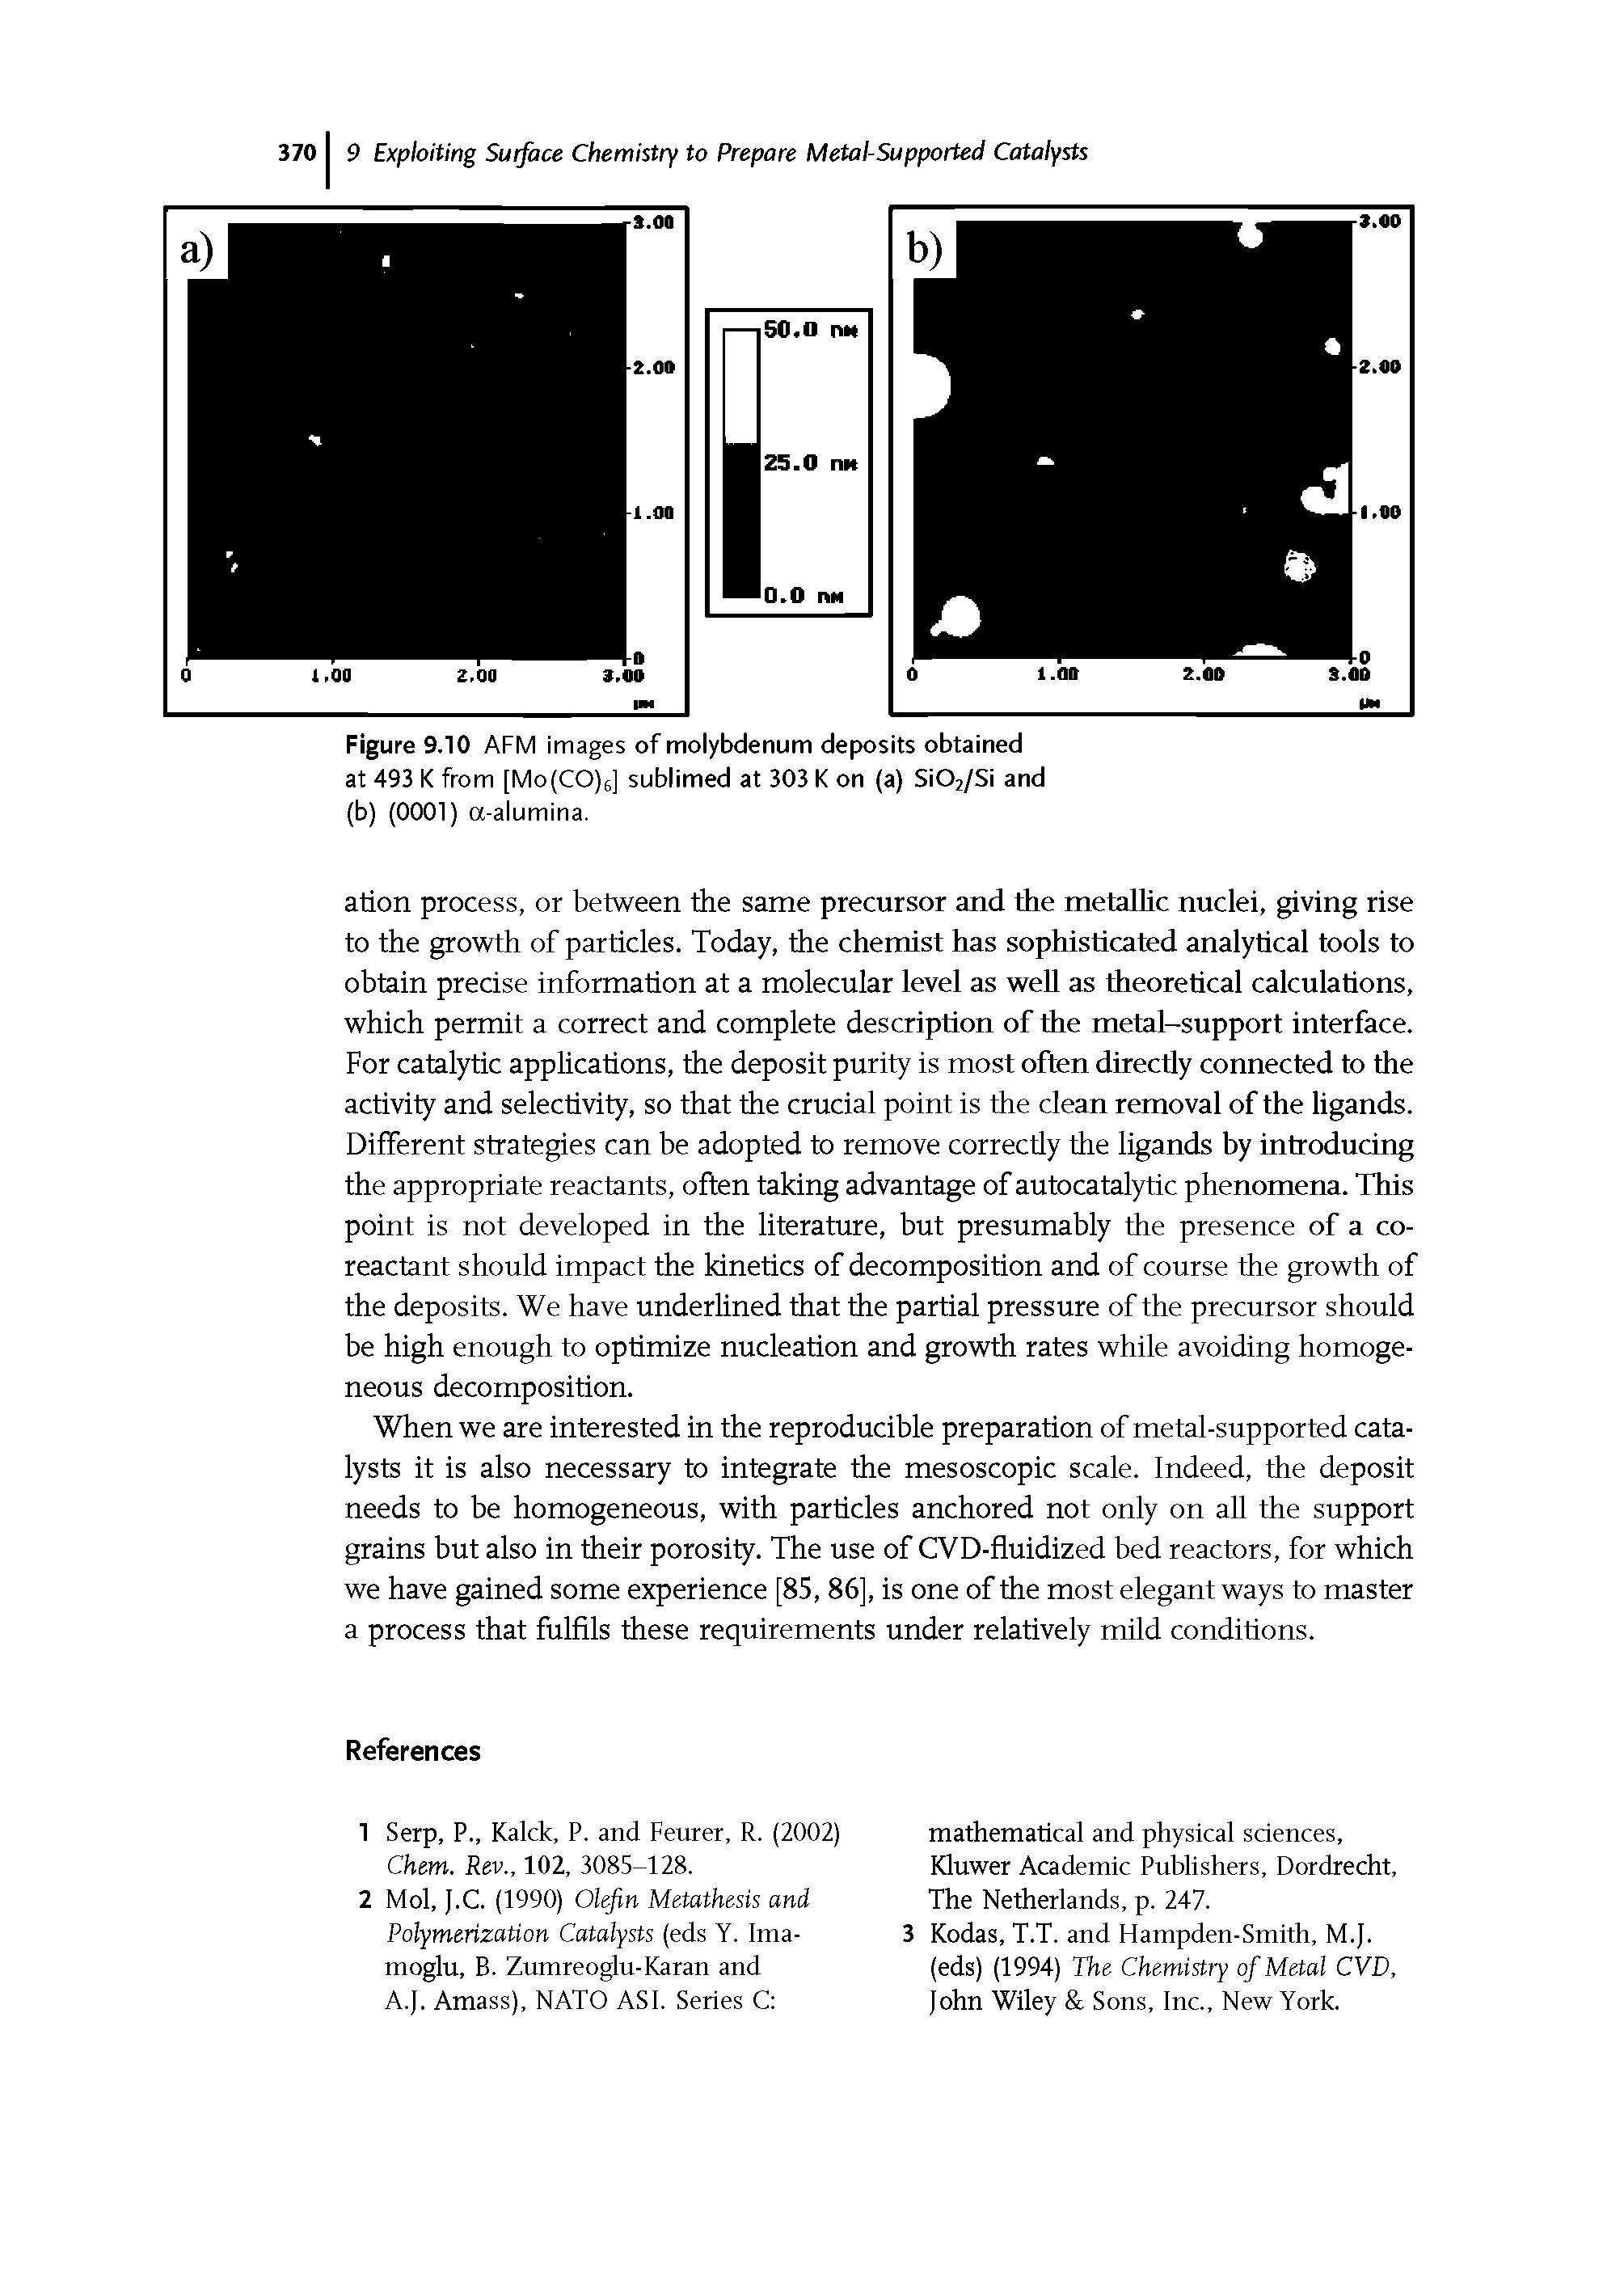 Figure 9.10 AFM images of molybdenum deposits obtained at 493 K from [Mo(CO)6] sublimed at 303 K on (a) Si02/Si and (b) (0001) a-alumina.